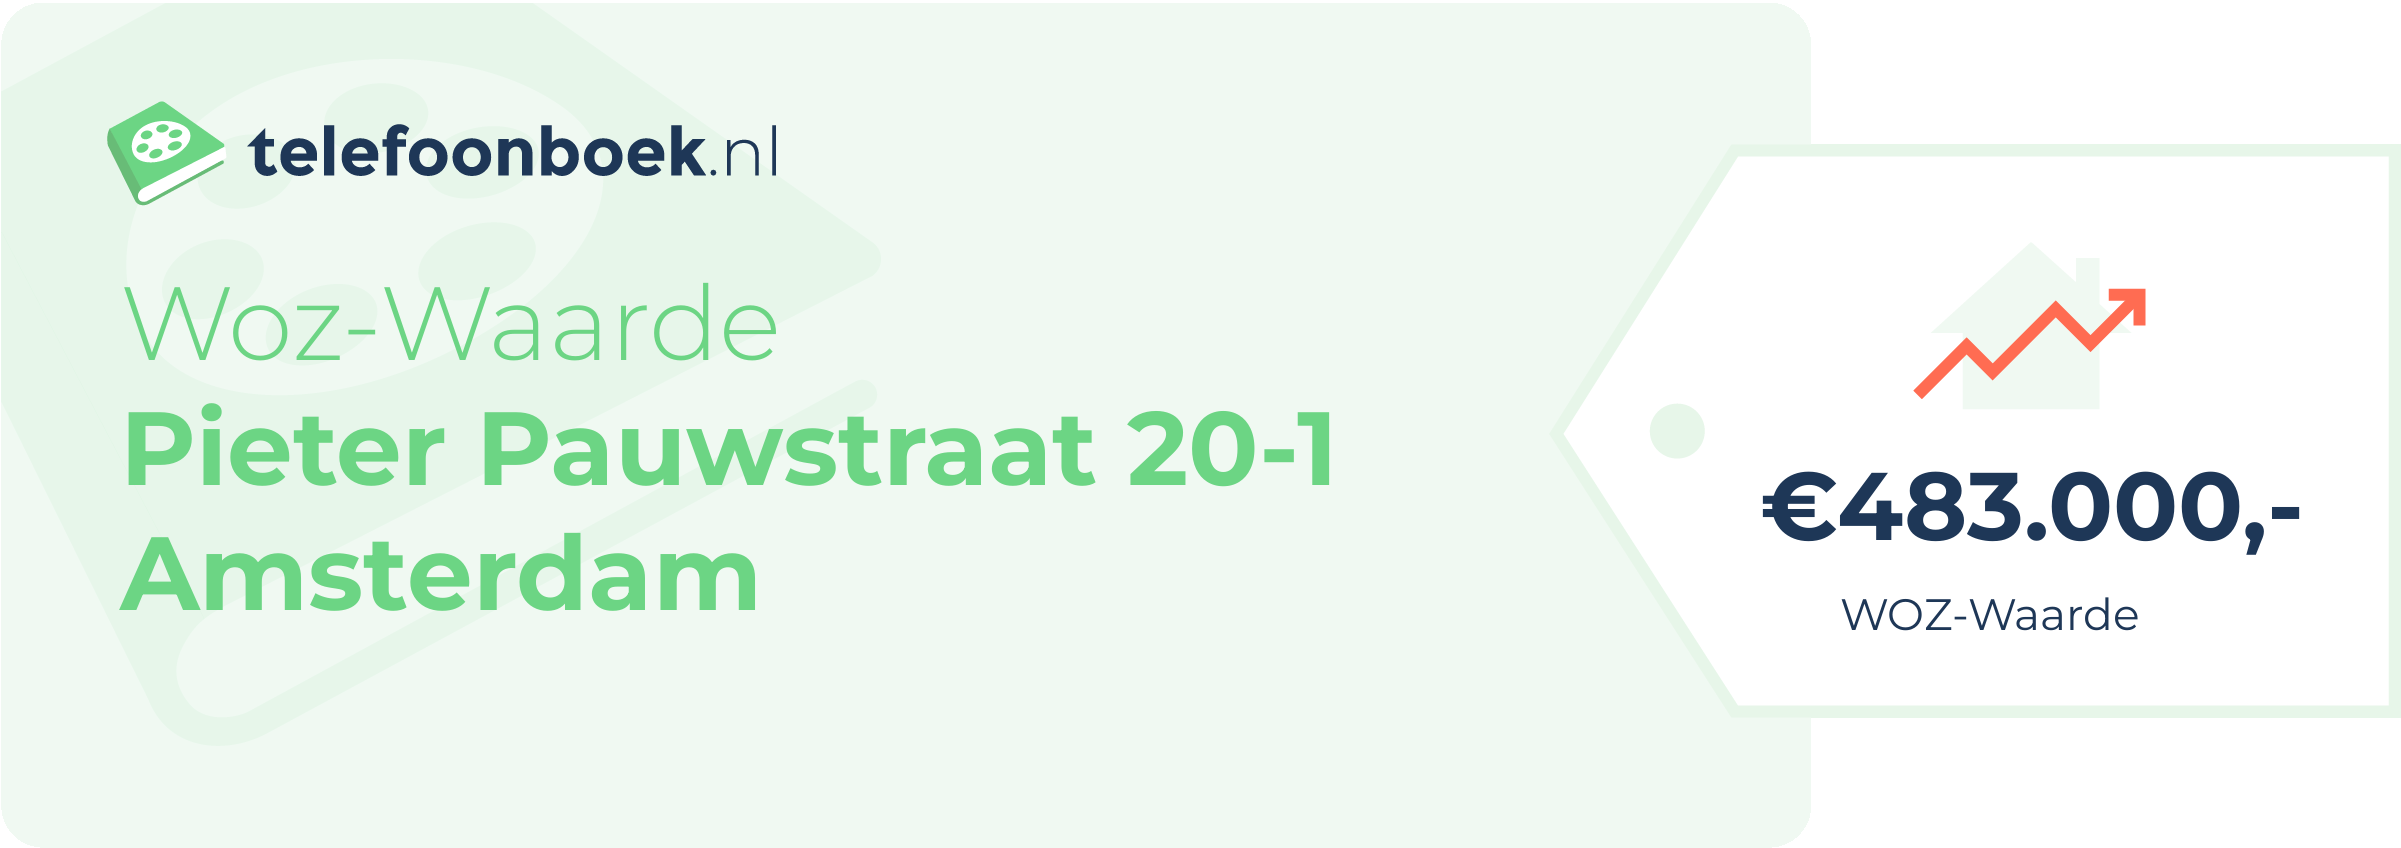 WOZ-waarde Pieter Pauwstraat 20-1 Amsterdam